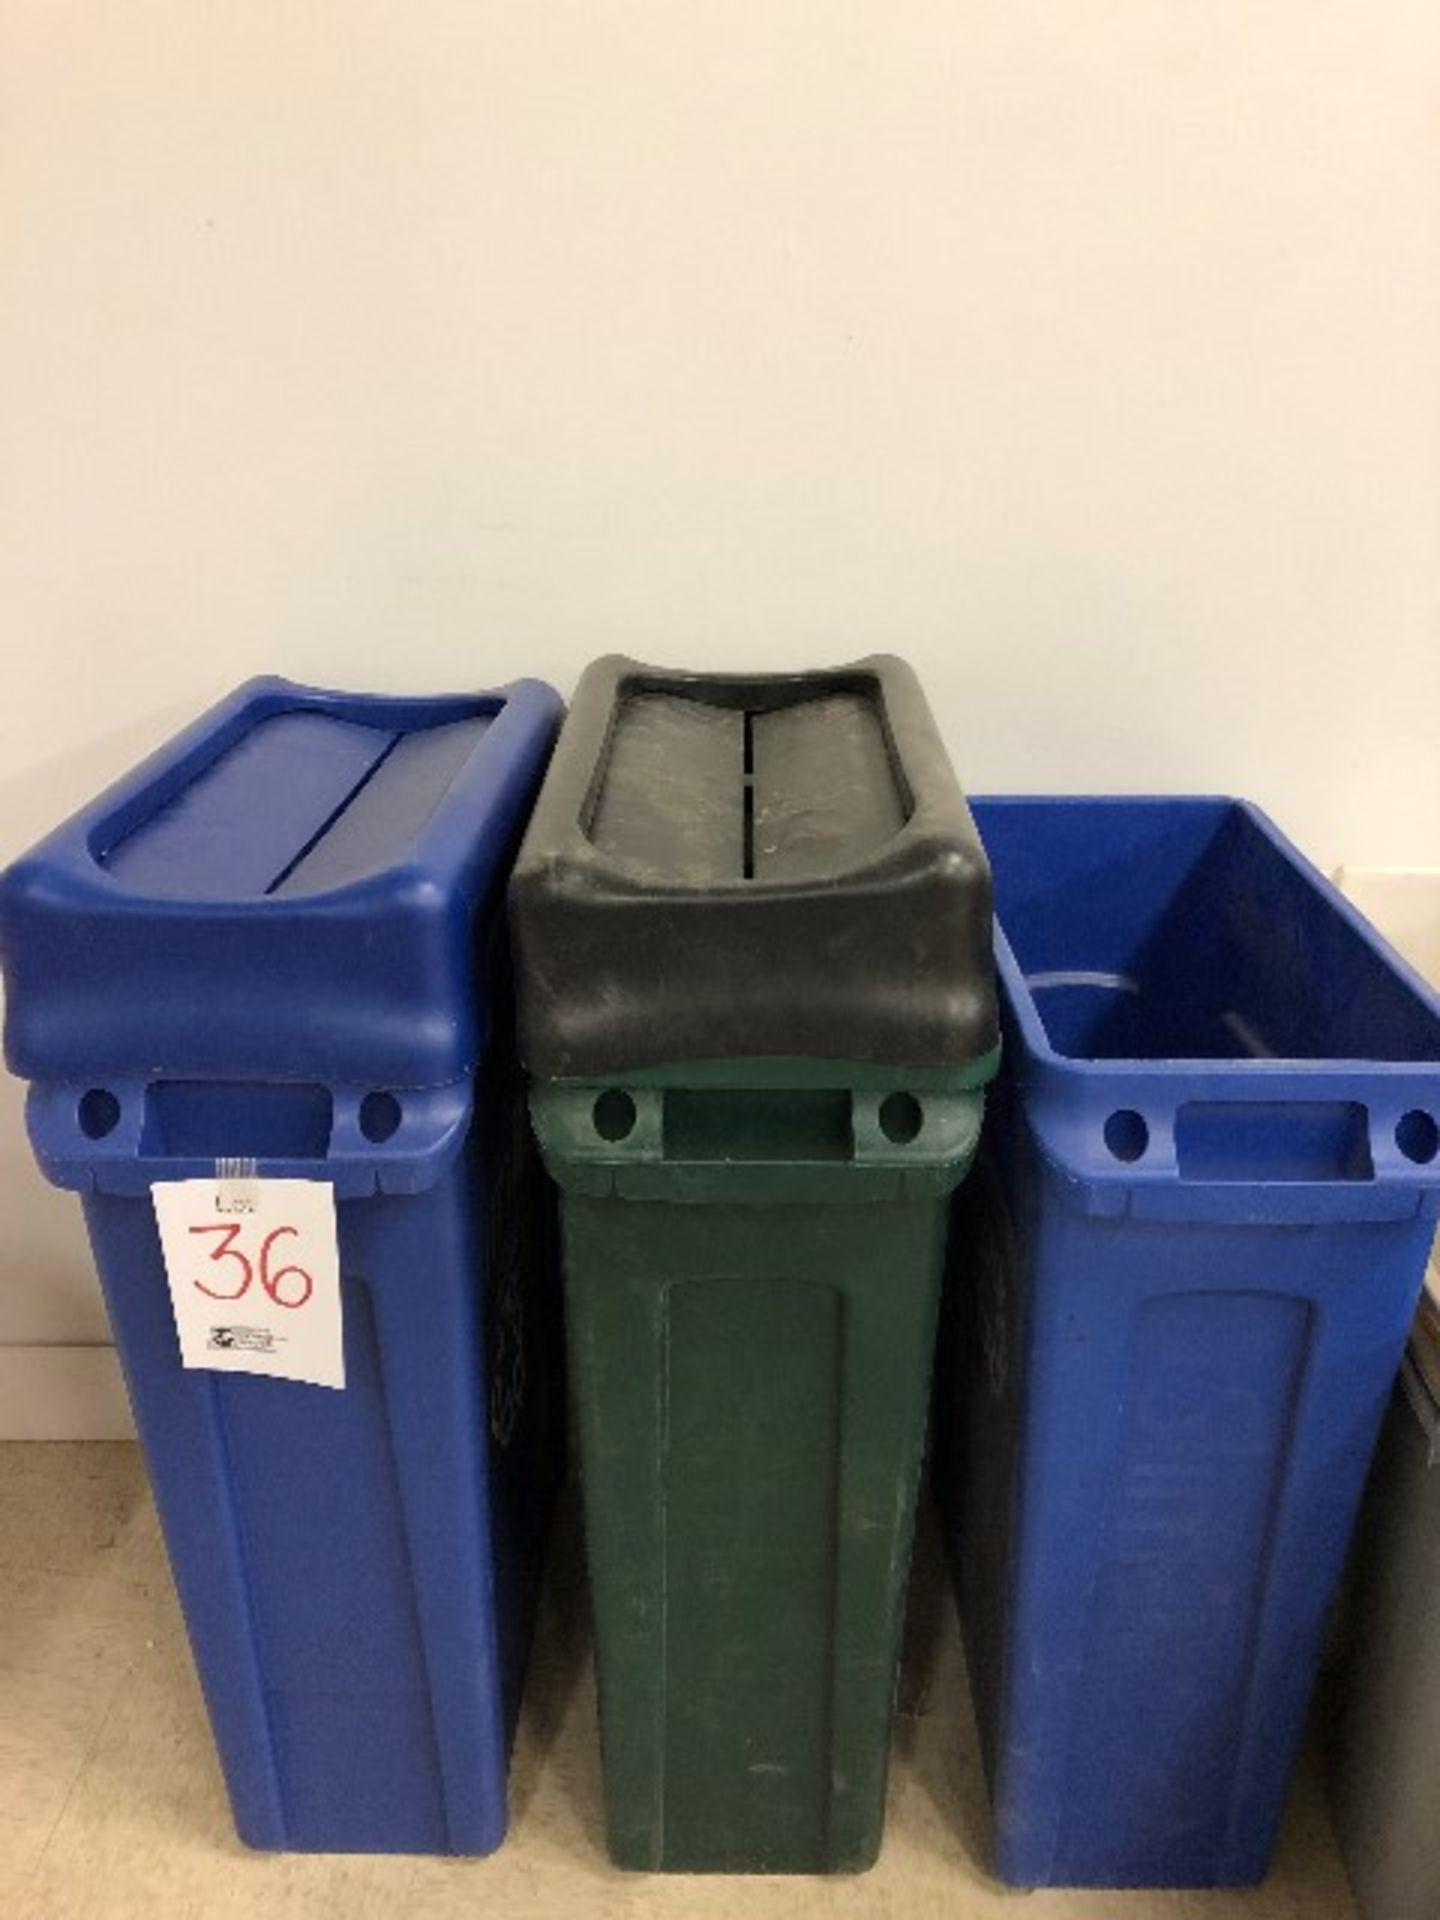 LOT: Rubbermaid assorted waste bins, 4pcs